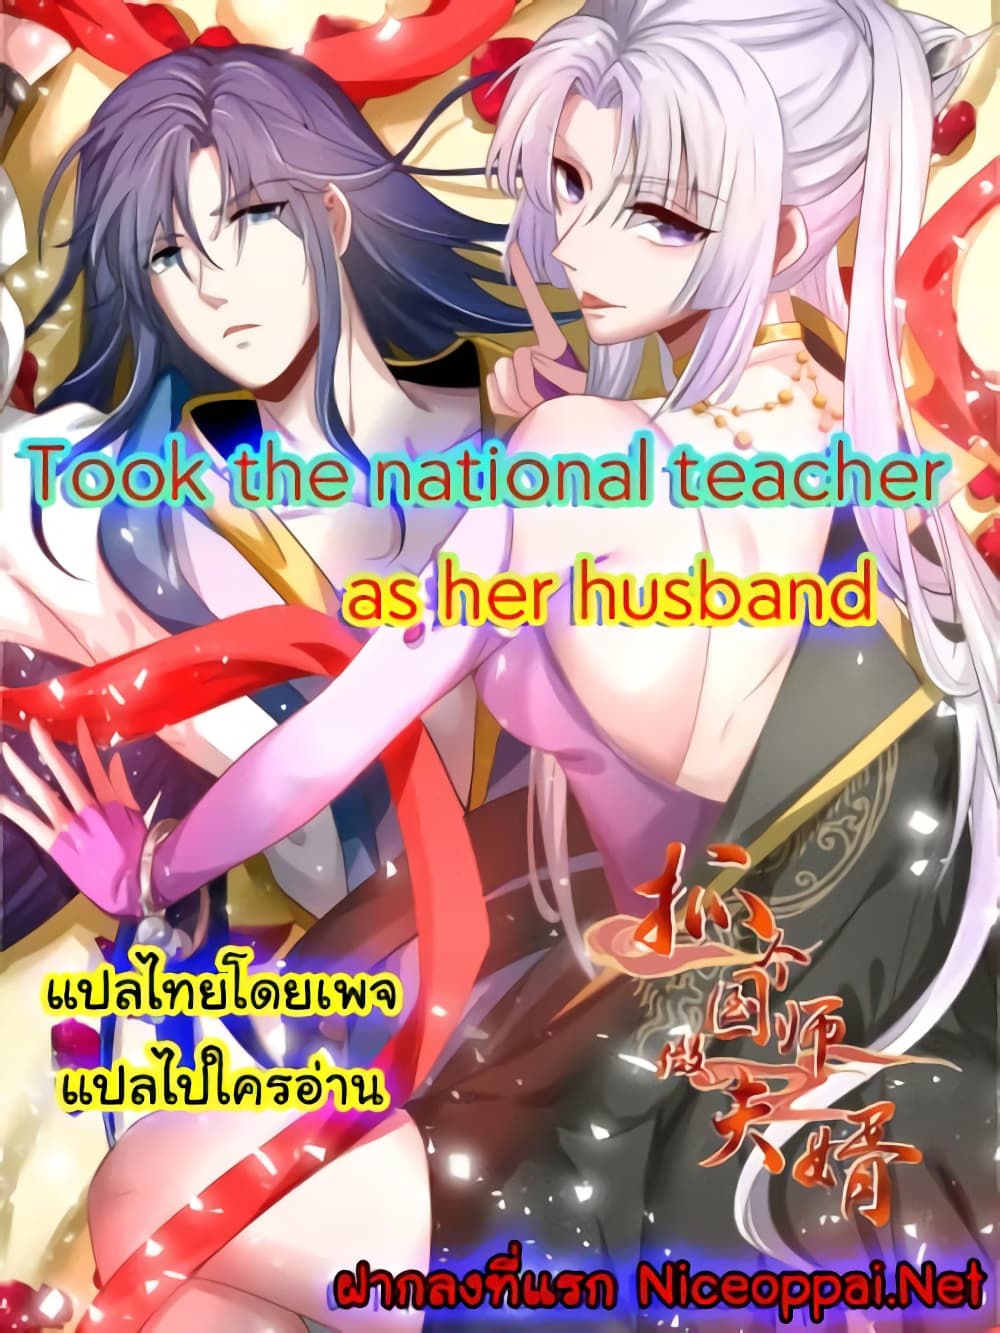 Took the National Teacher as Her Husband 20 (1)